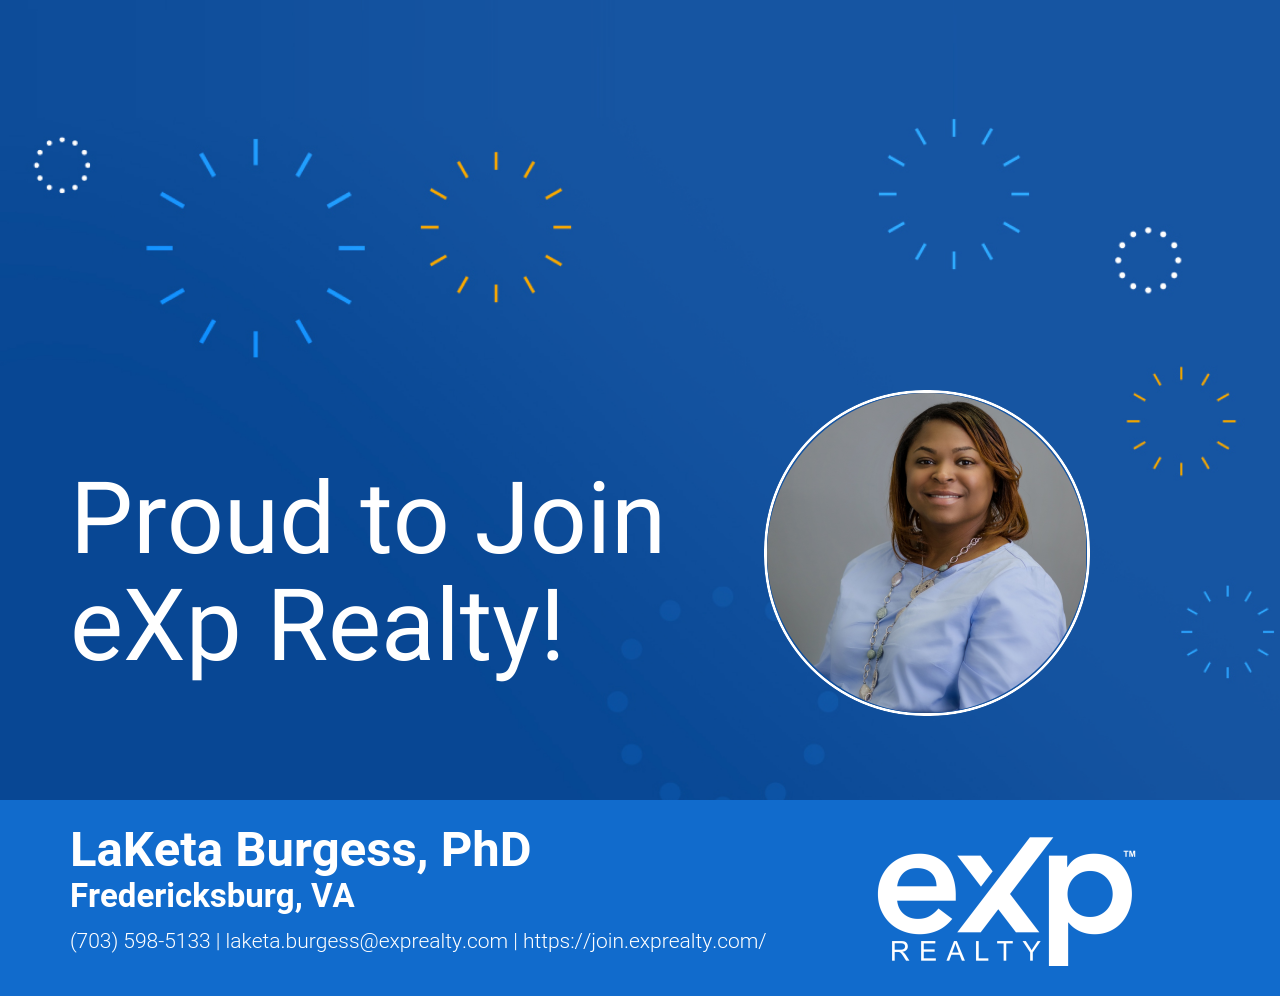 LaKeta Burgess, PhD Joined eXp Realty!